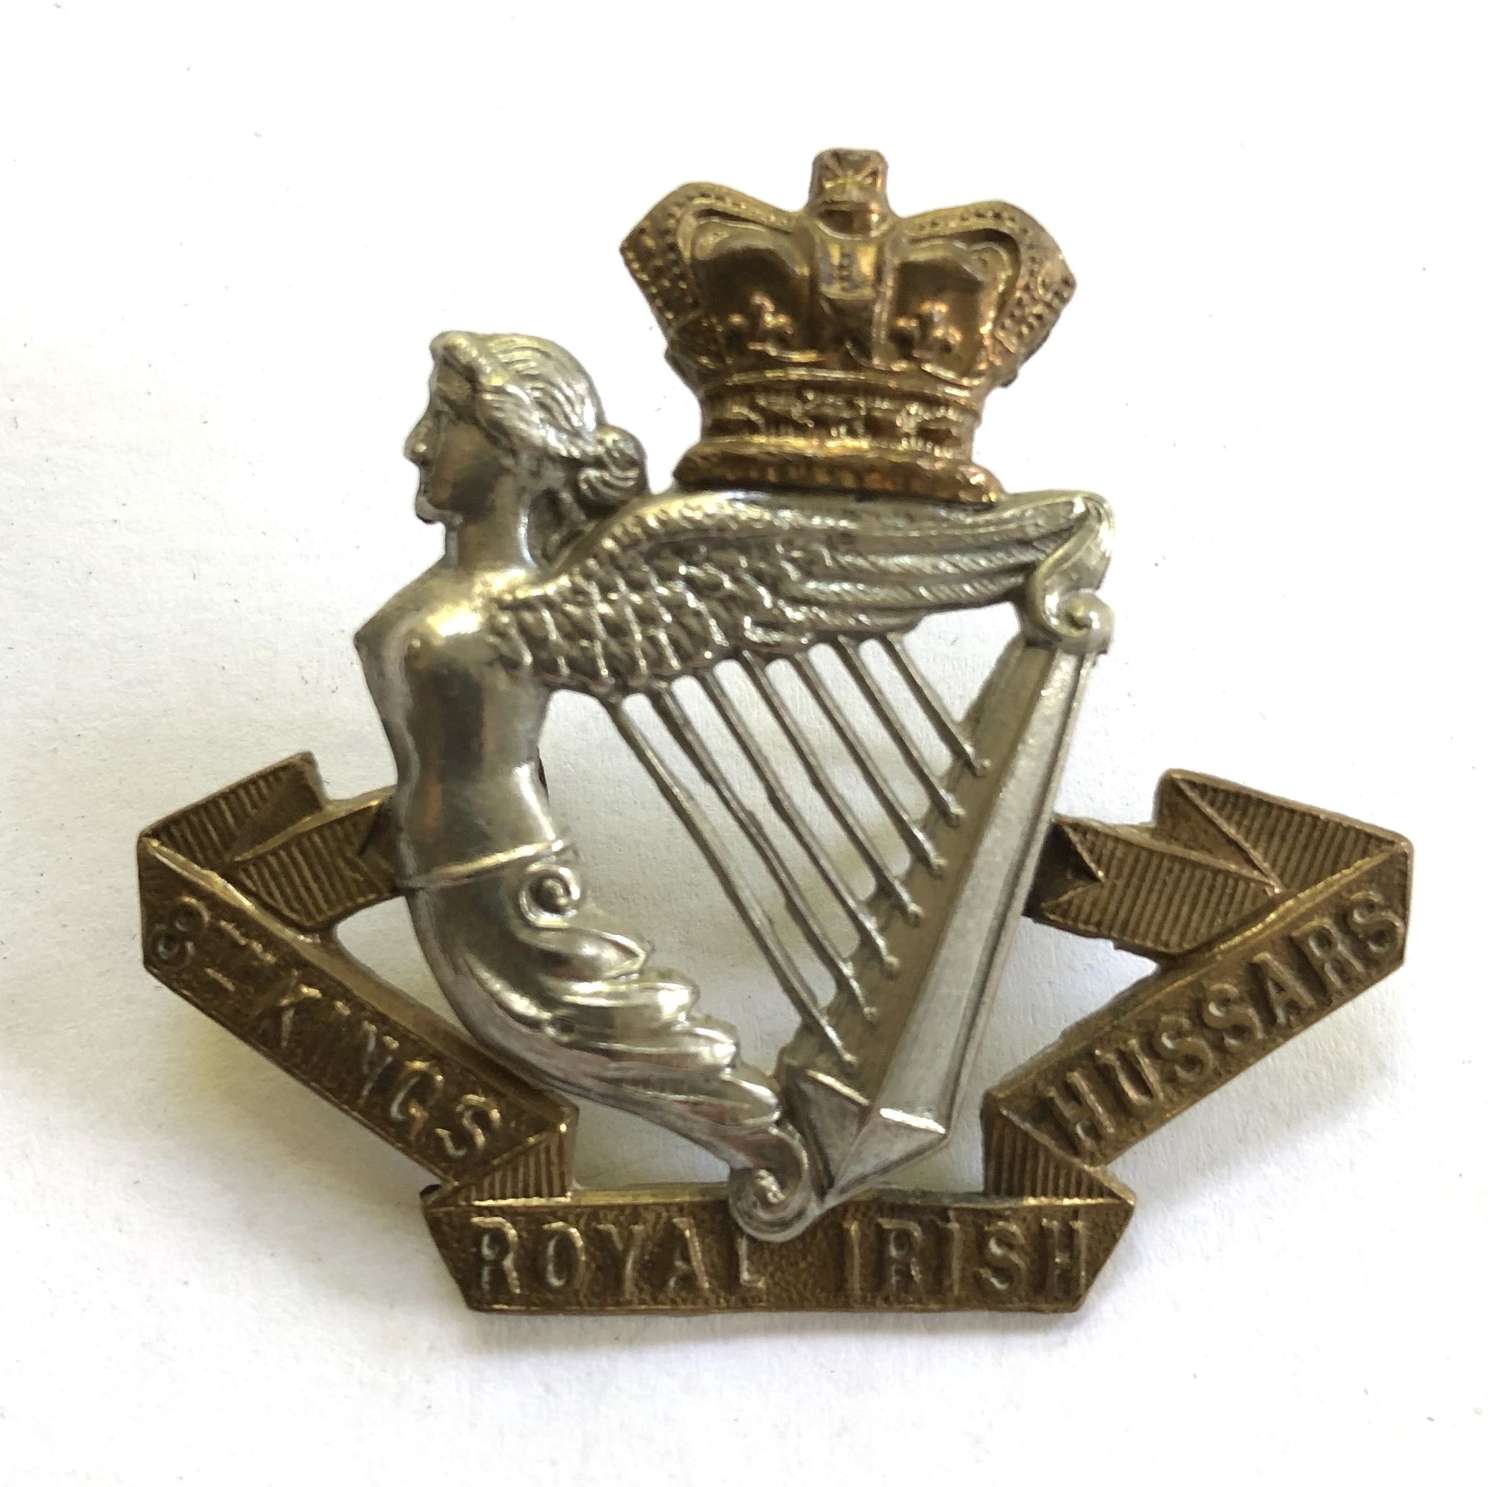 8th King’s Royal Irish Hussars Victorian cap badge circa 1896-1901